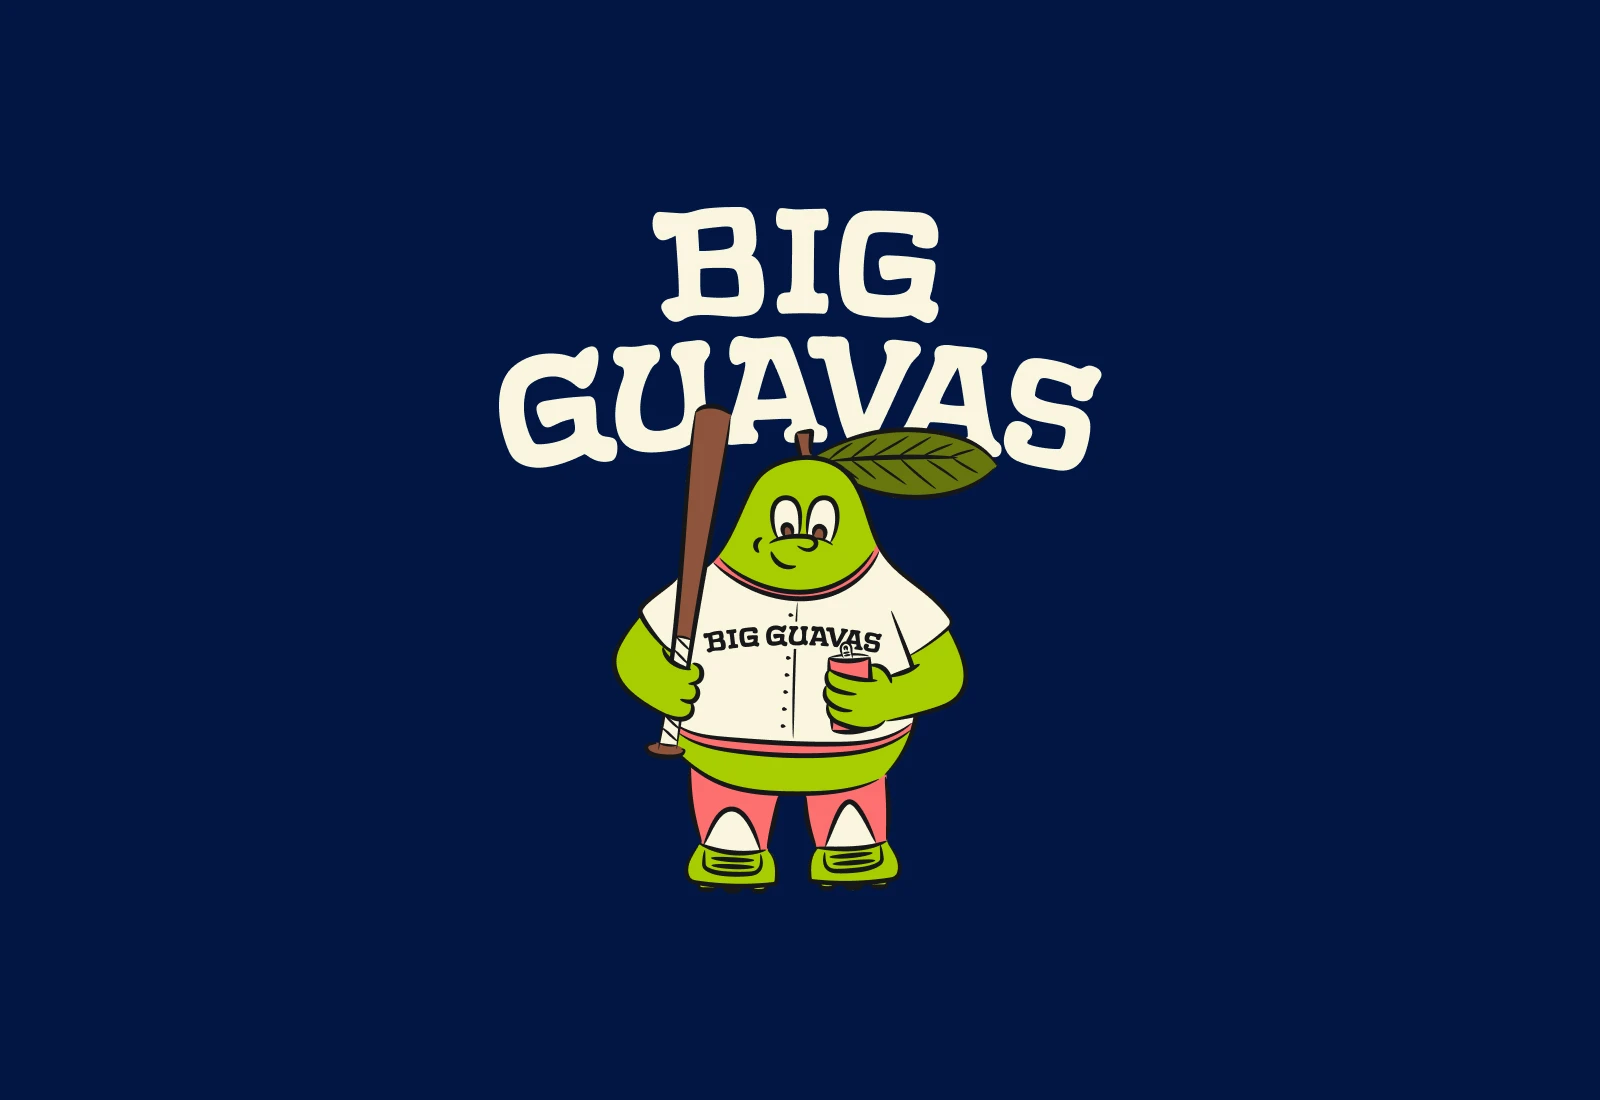 Guavy, the Big Guavas Sandlot Baseball Team mascot.